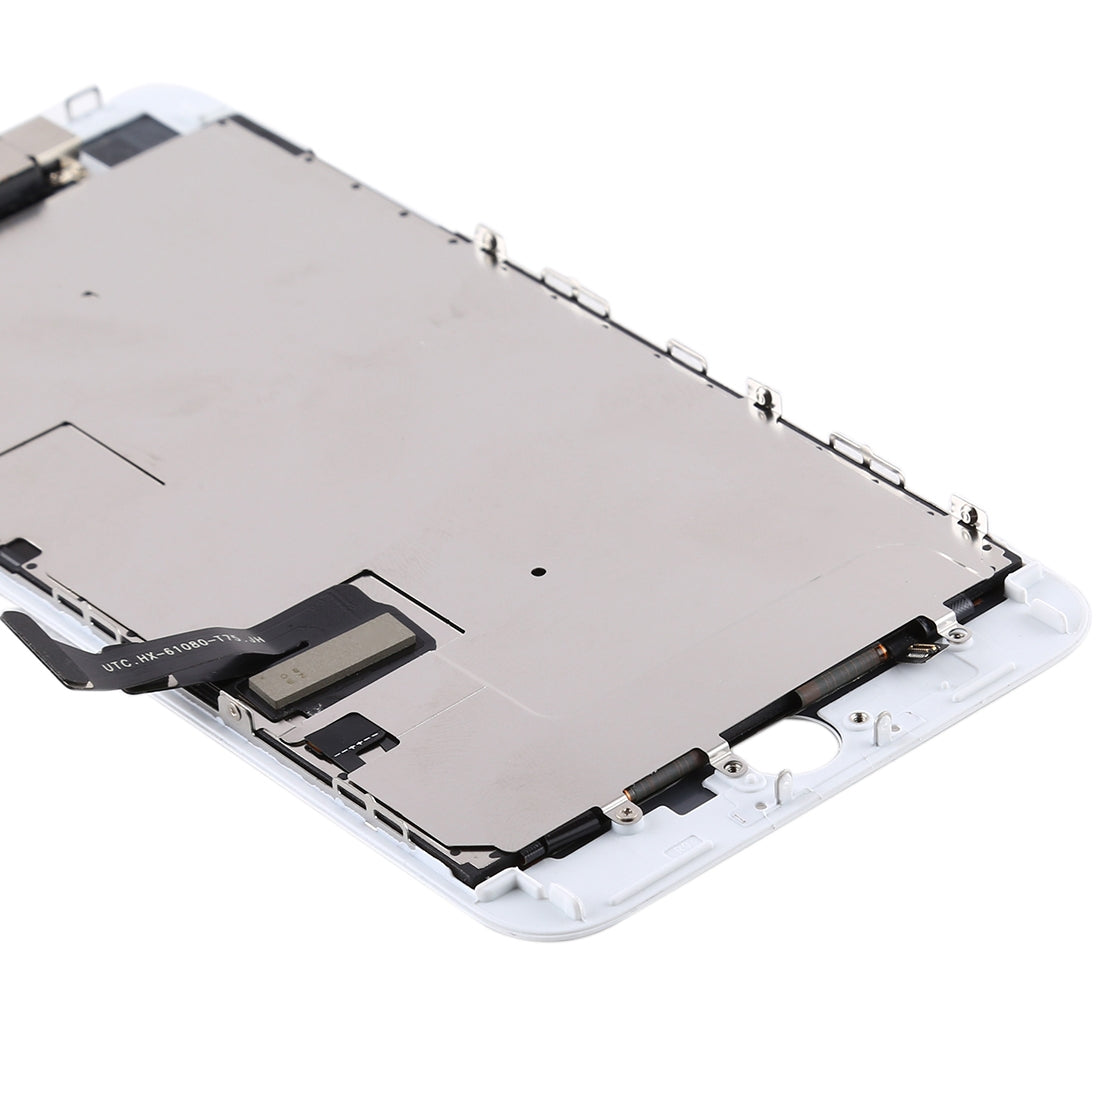 Pantalla LCD + Tactil Digitalizador Apple iPhone 8 Plus (con Cámara) Blanco